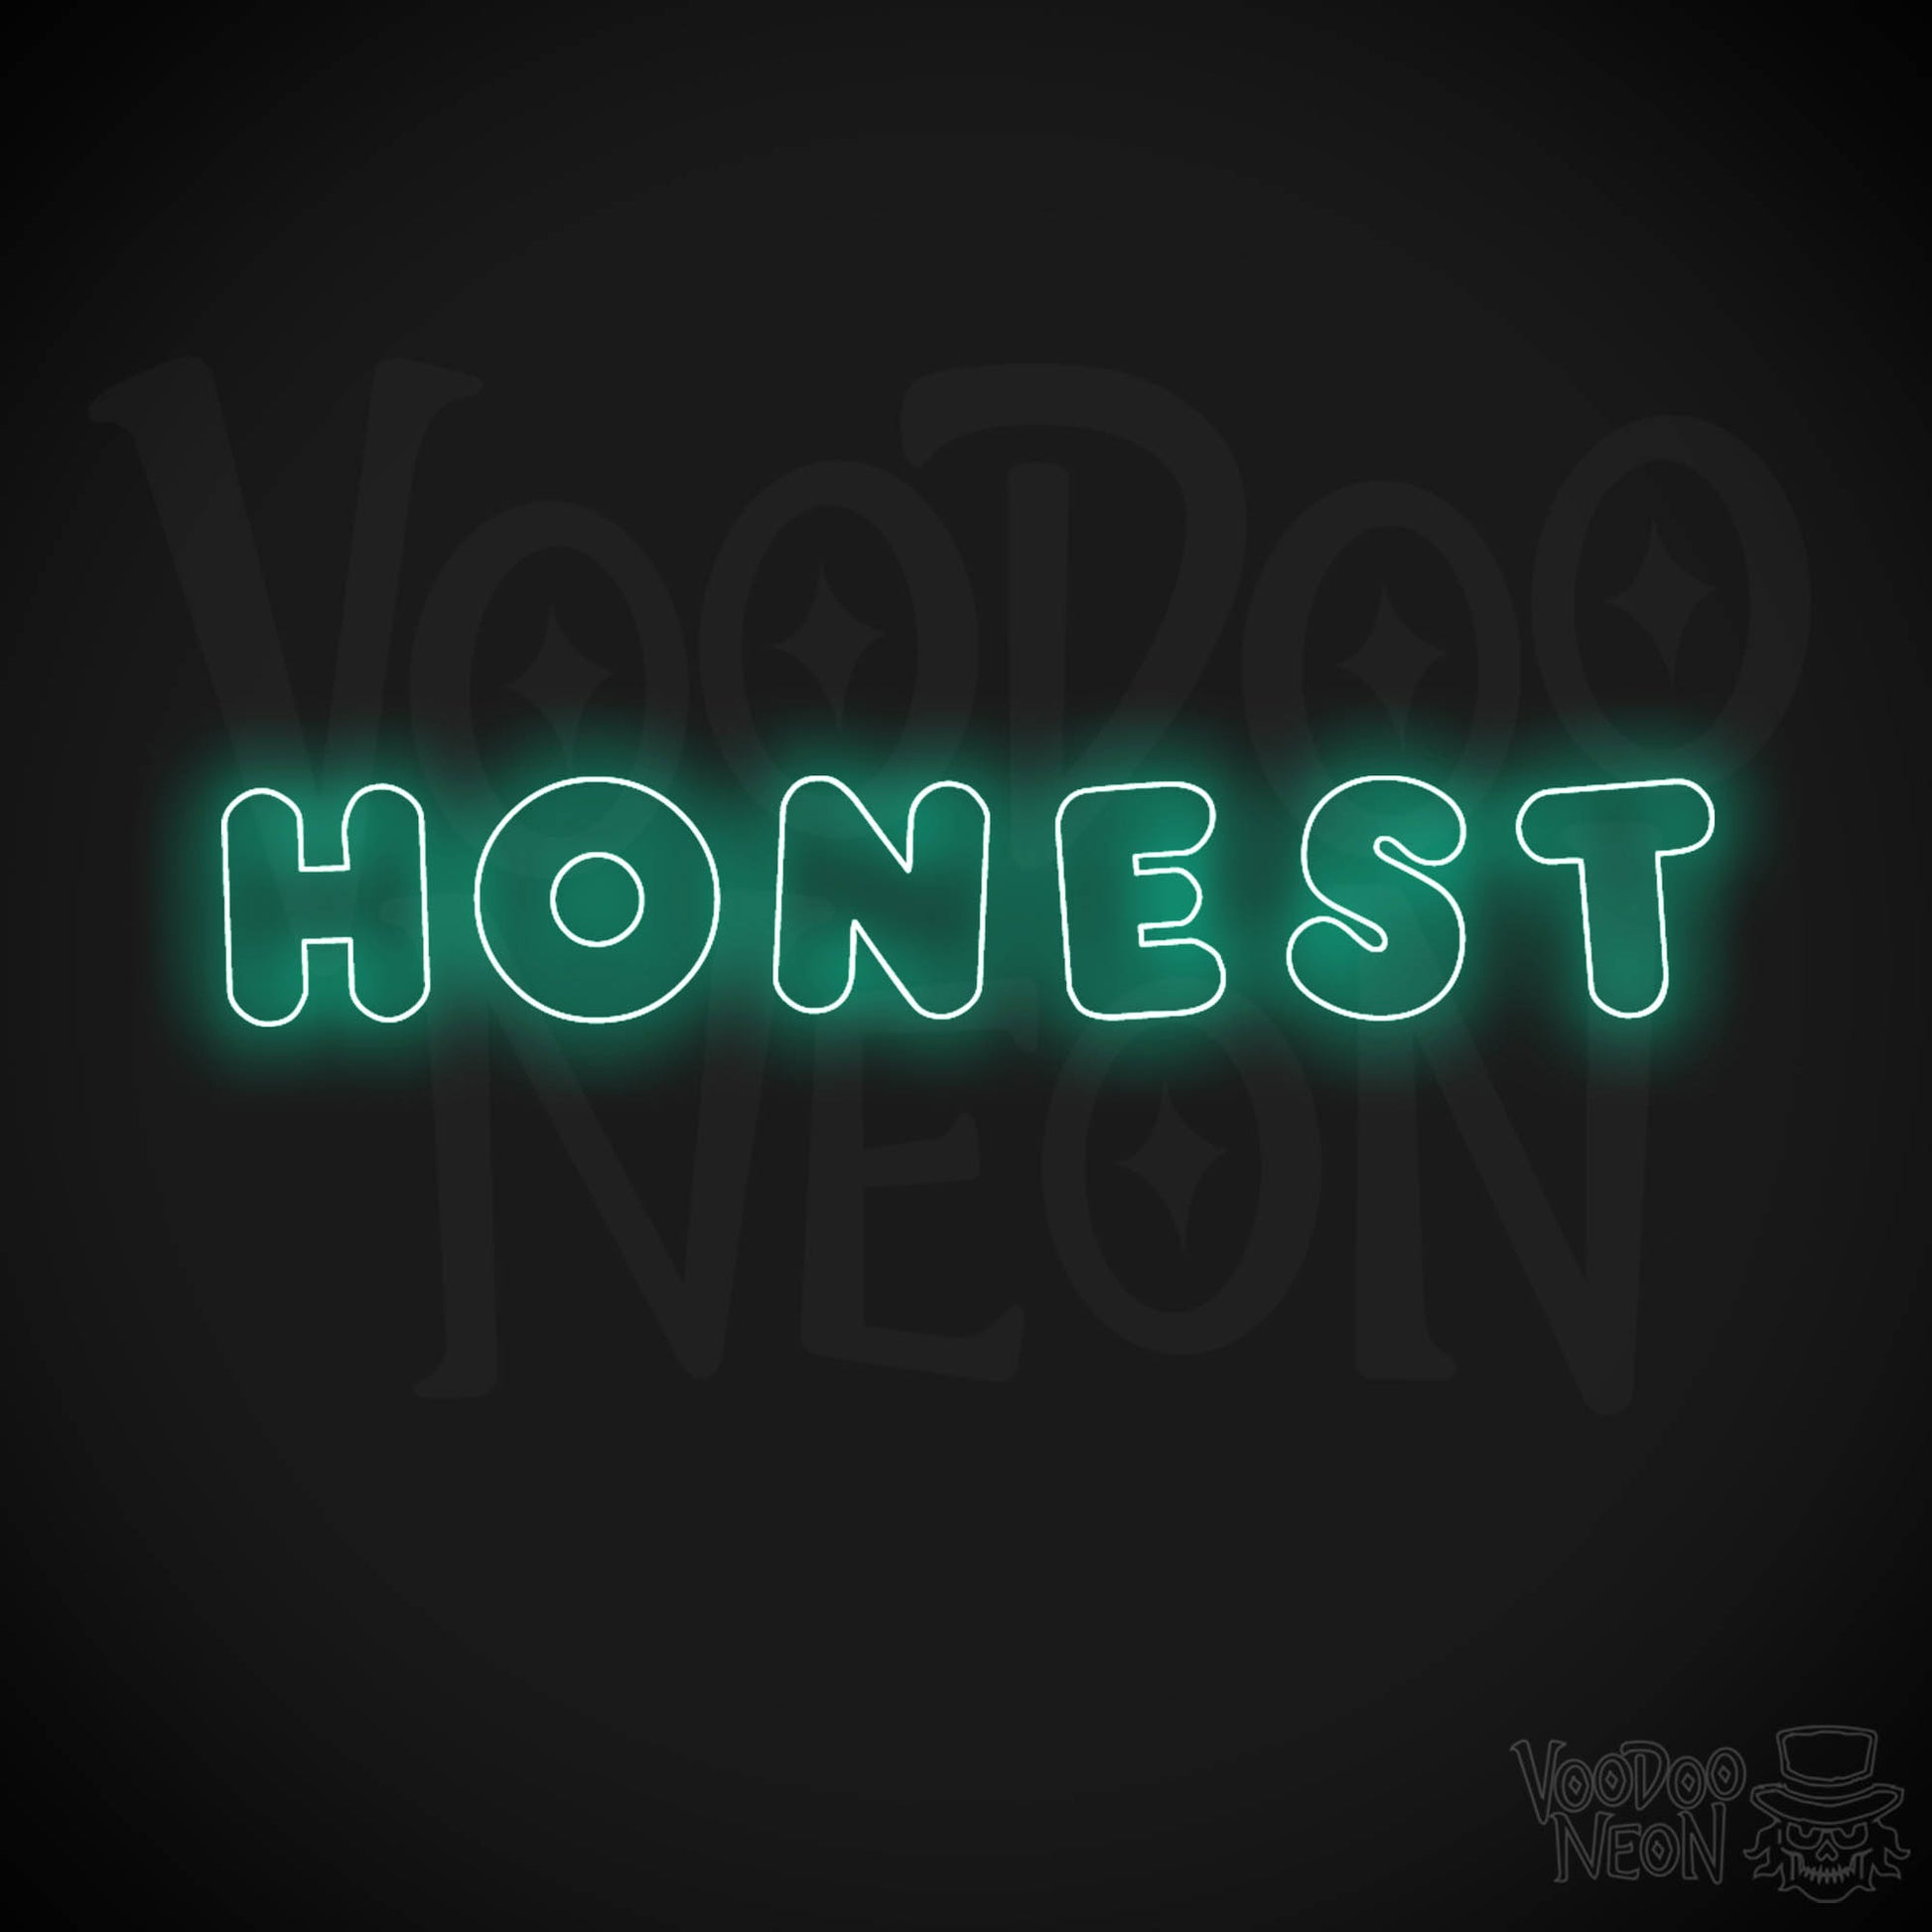 Honest Neon Sign - Neon Honest Sign - LED Neon Wall Art - Color Light Green